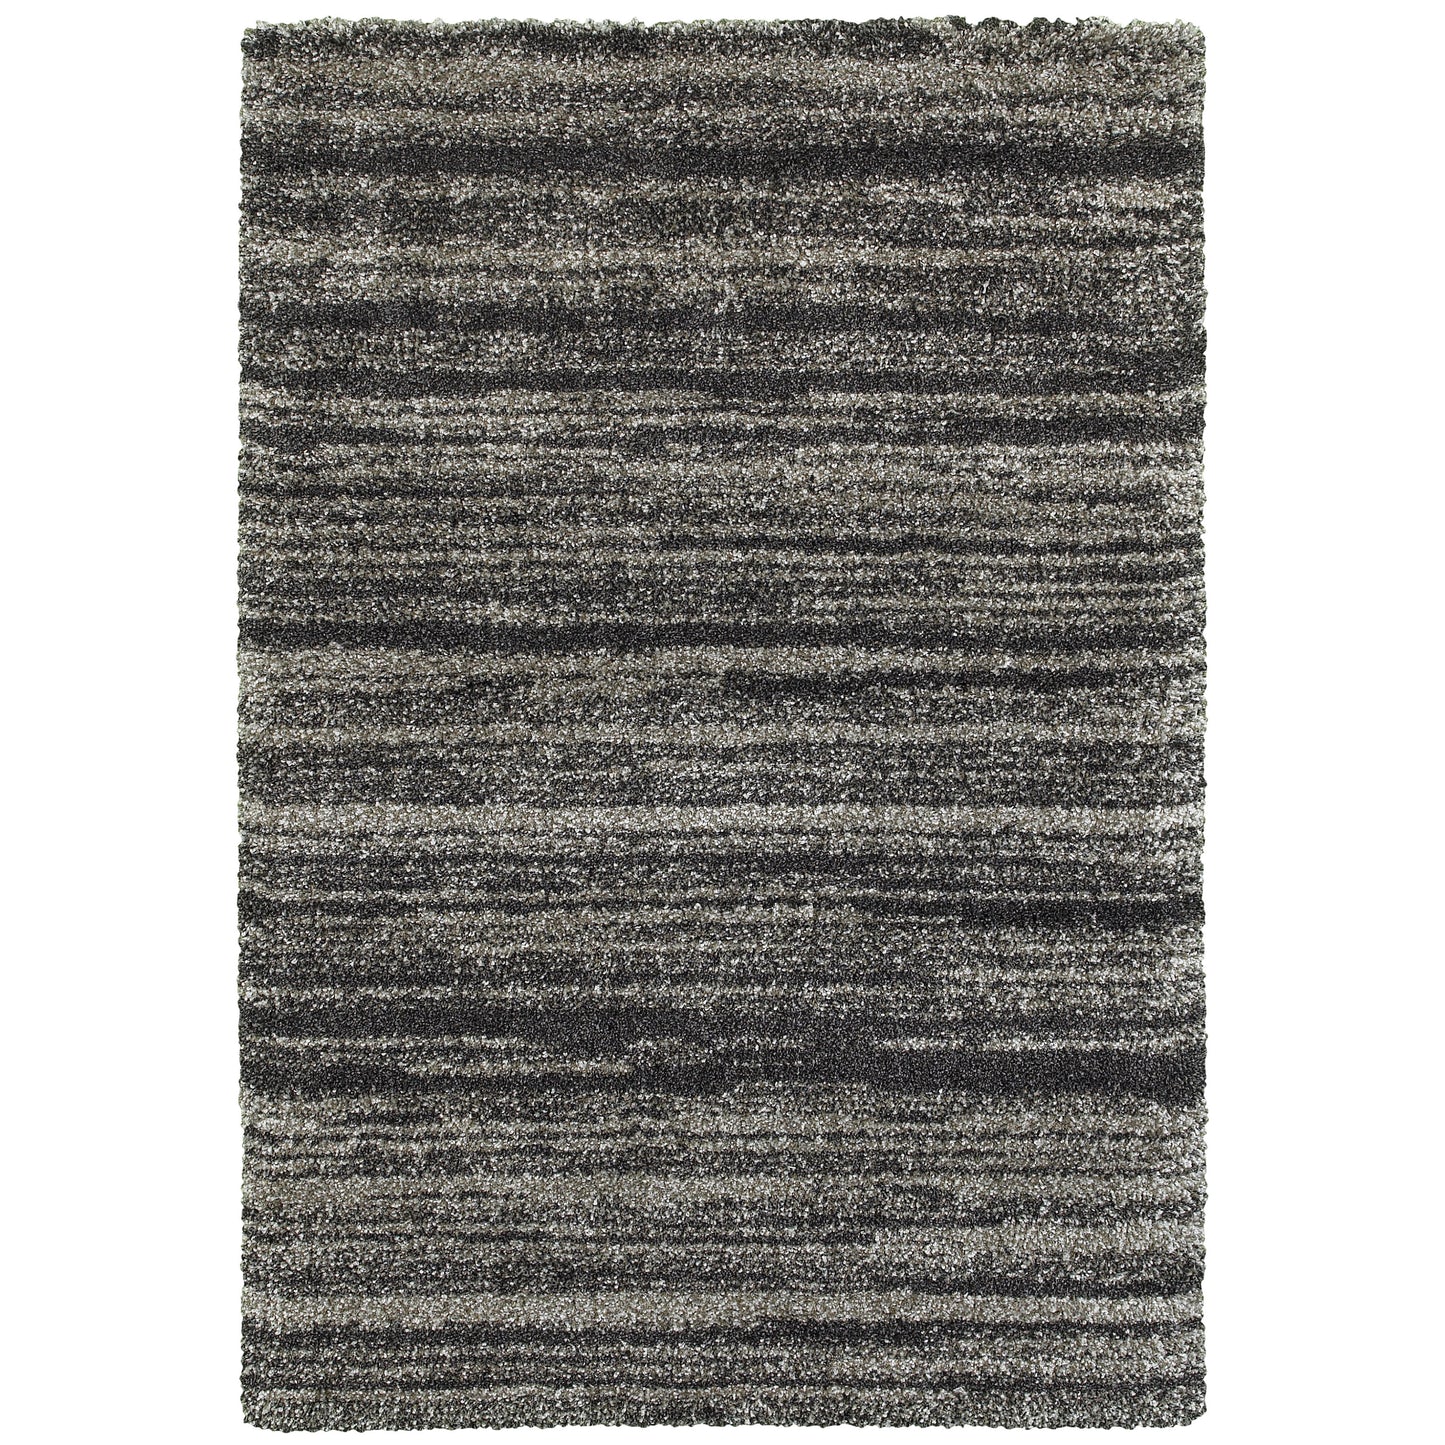 HENDERSON Stripe Power-Loomed Synthetic Blend Indoor Area Rug by Oriental Weavers